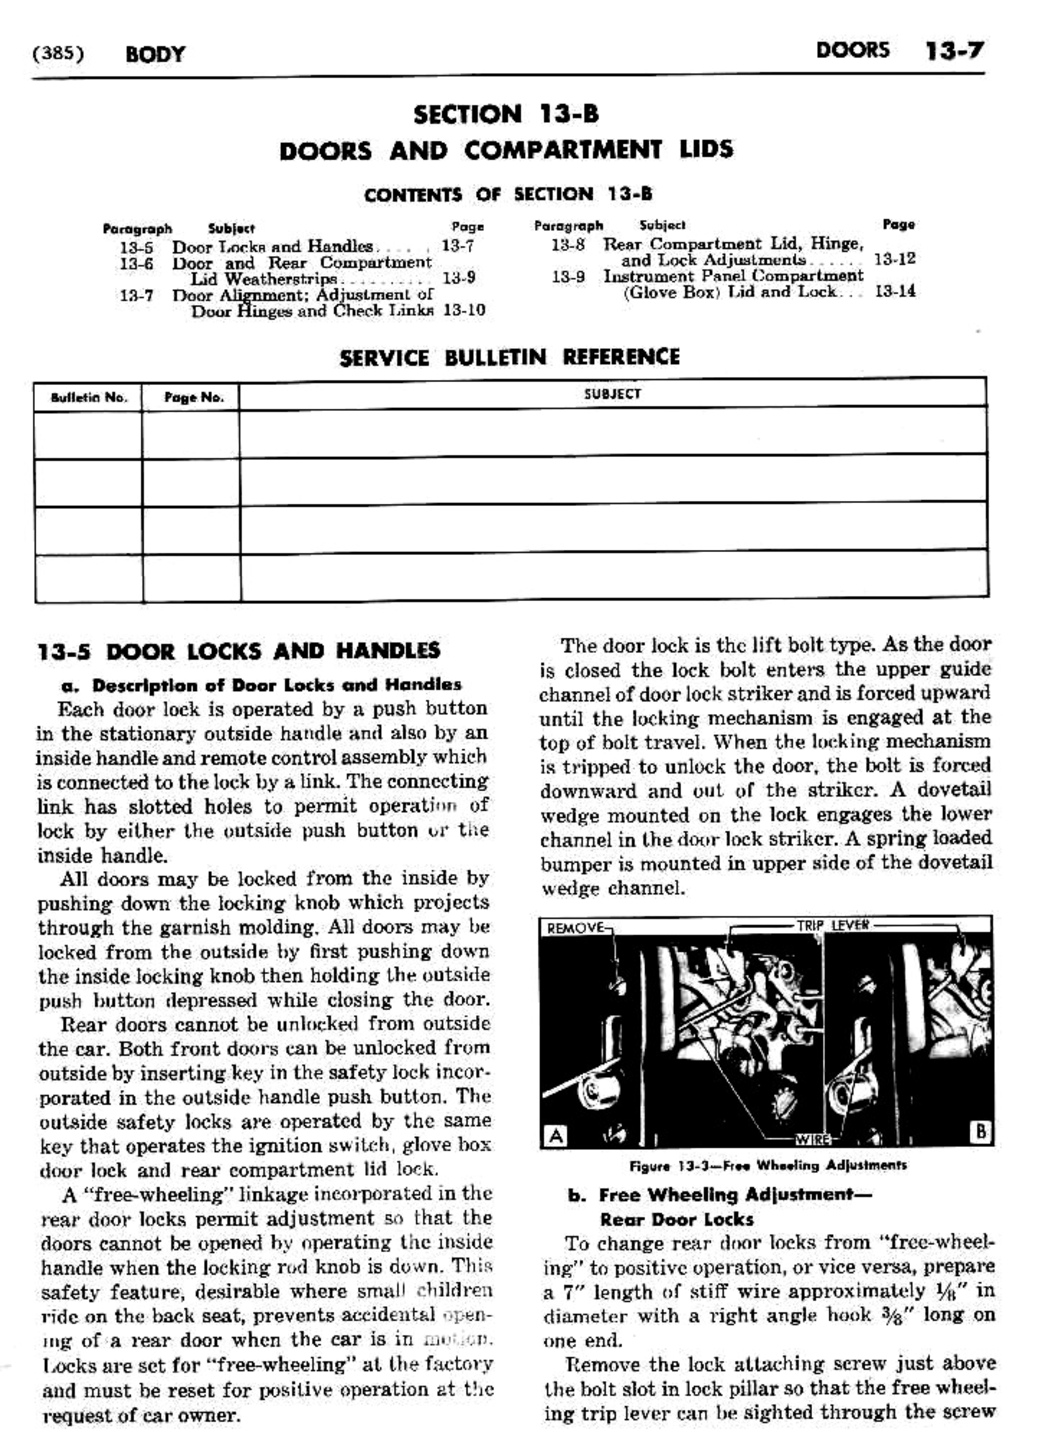 n_14 1950 Buick Shop Manual - Body-007-007.jpg